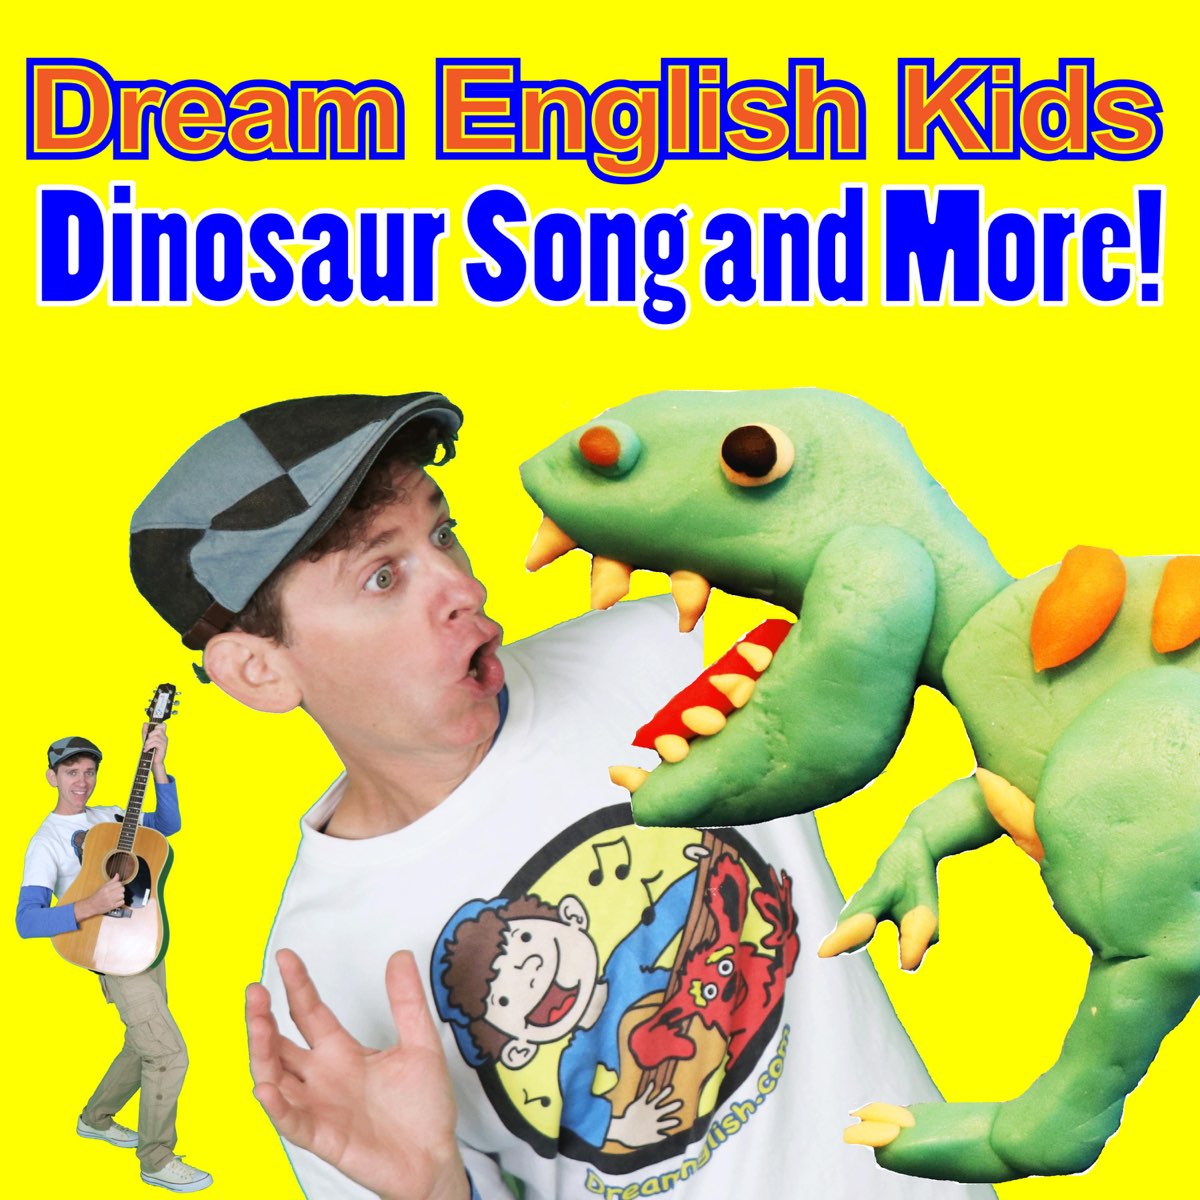 English dream song. Dream English Kids. Dinosaurs песня. Динозавры песня 2003. Dinosaurs in the Song to Play at last.